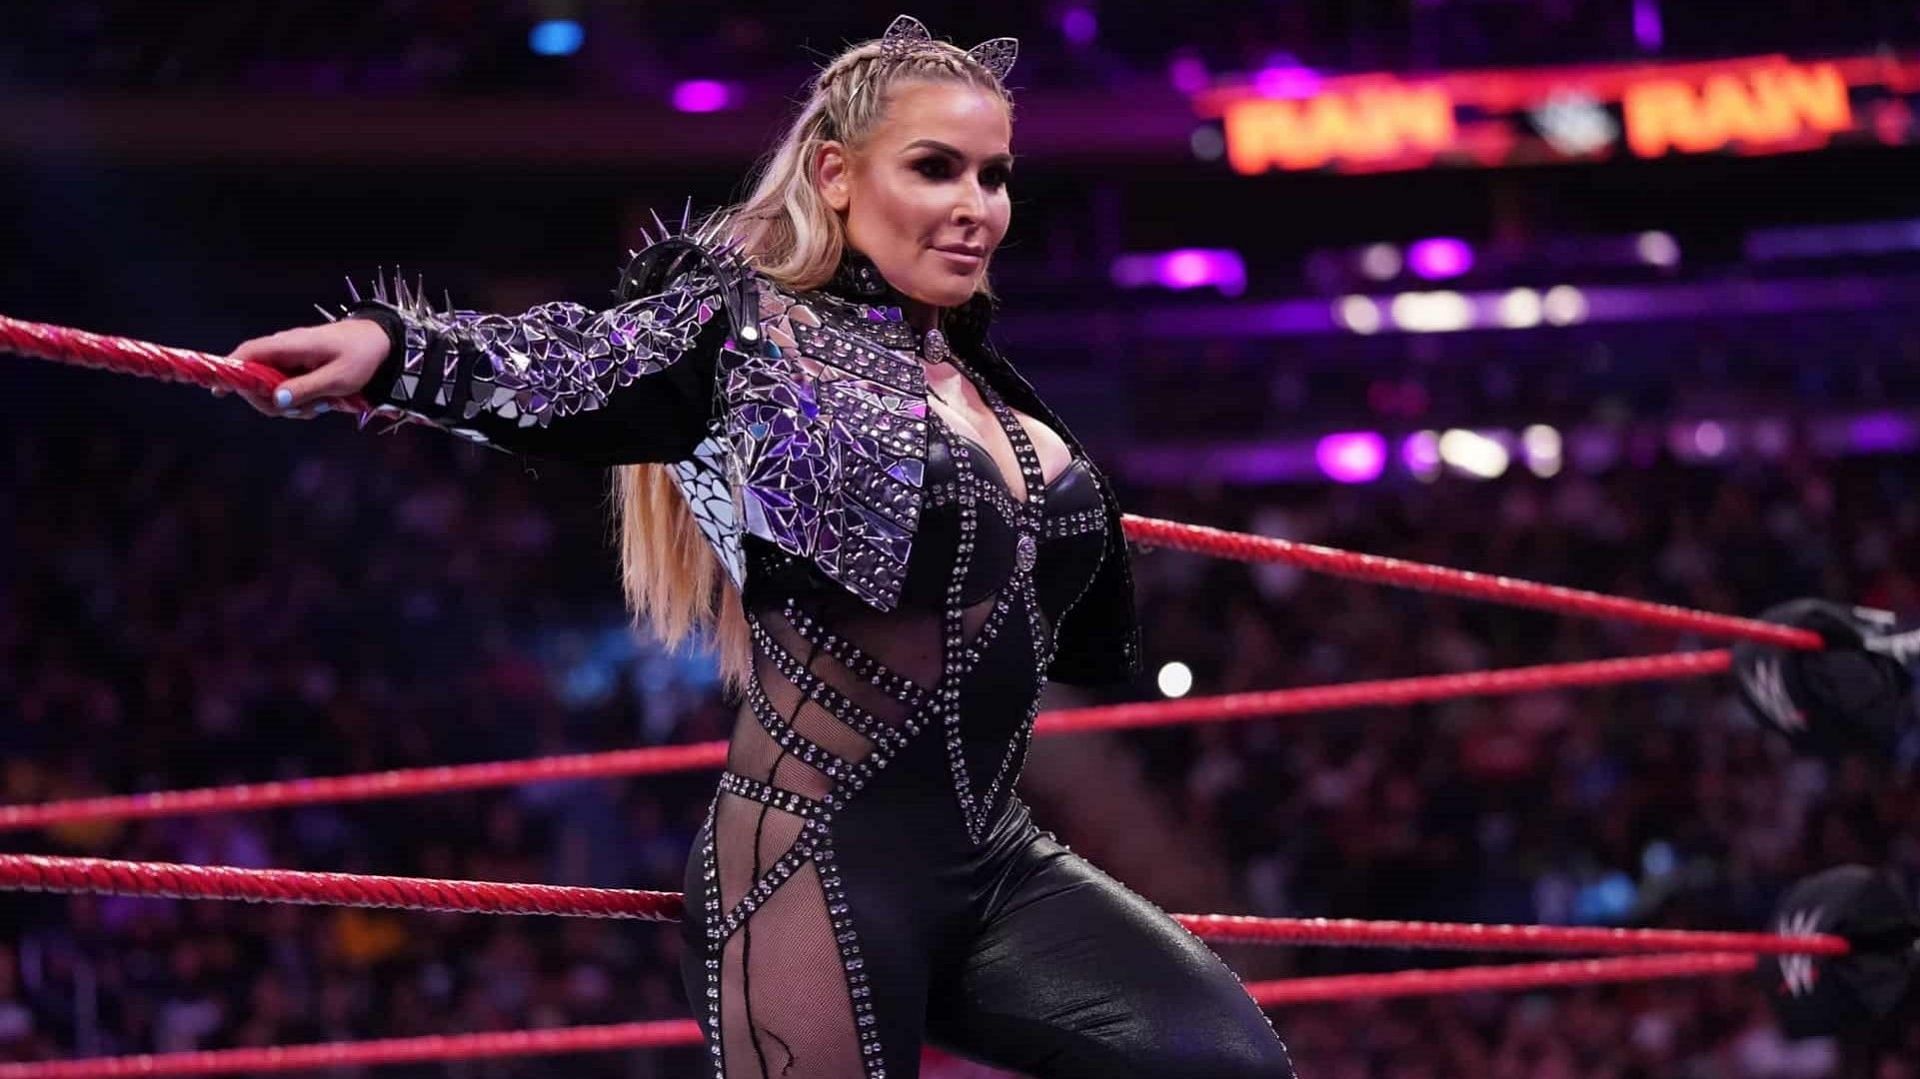 Natalya poses on the apron during WWE RAW